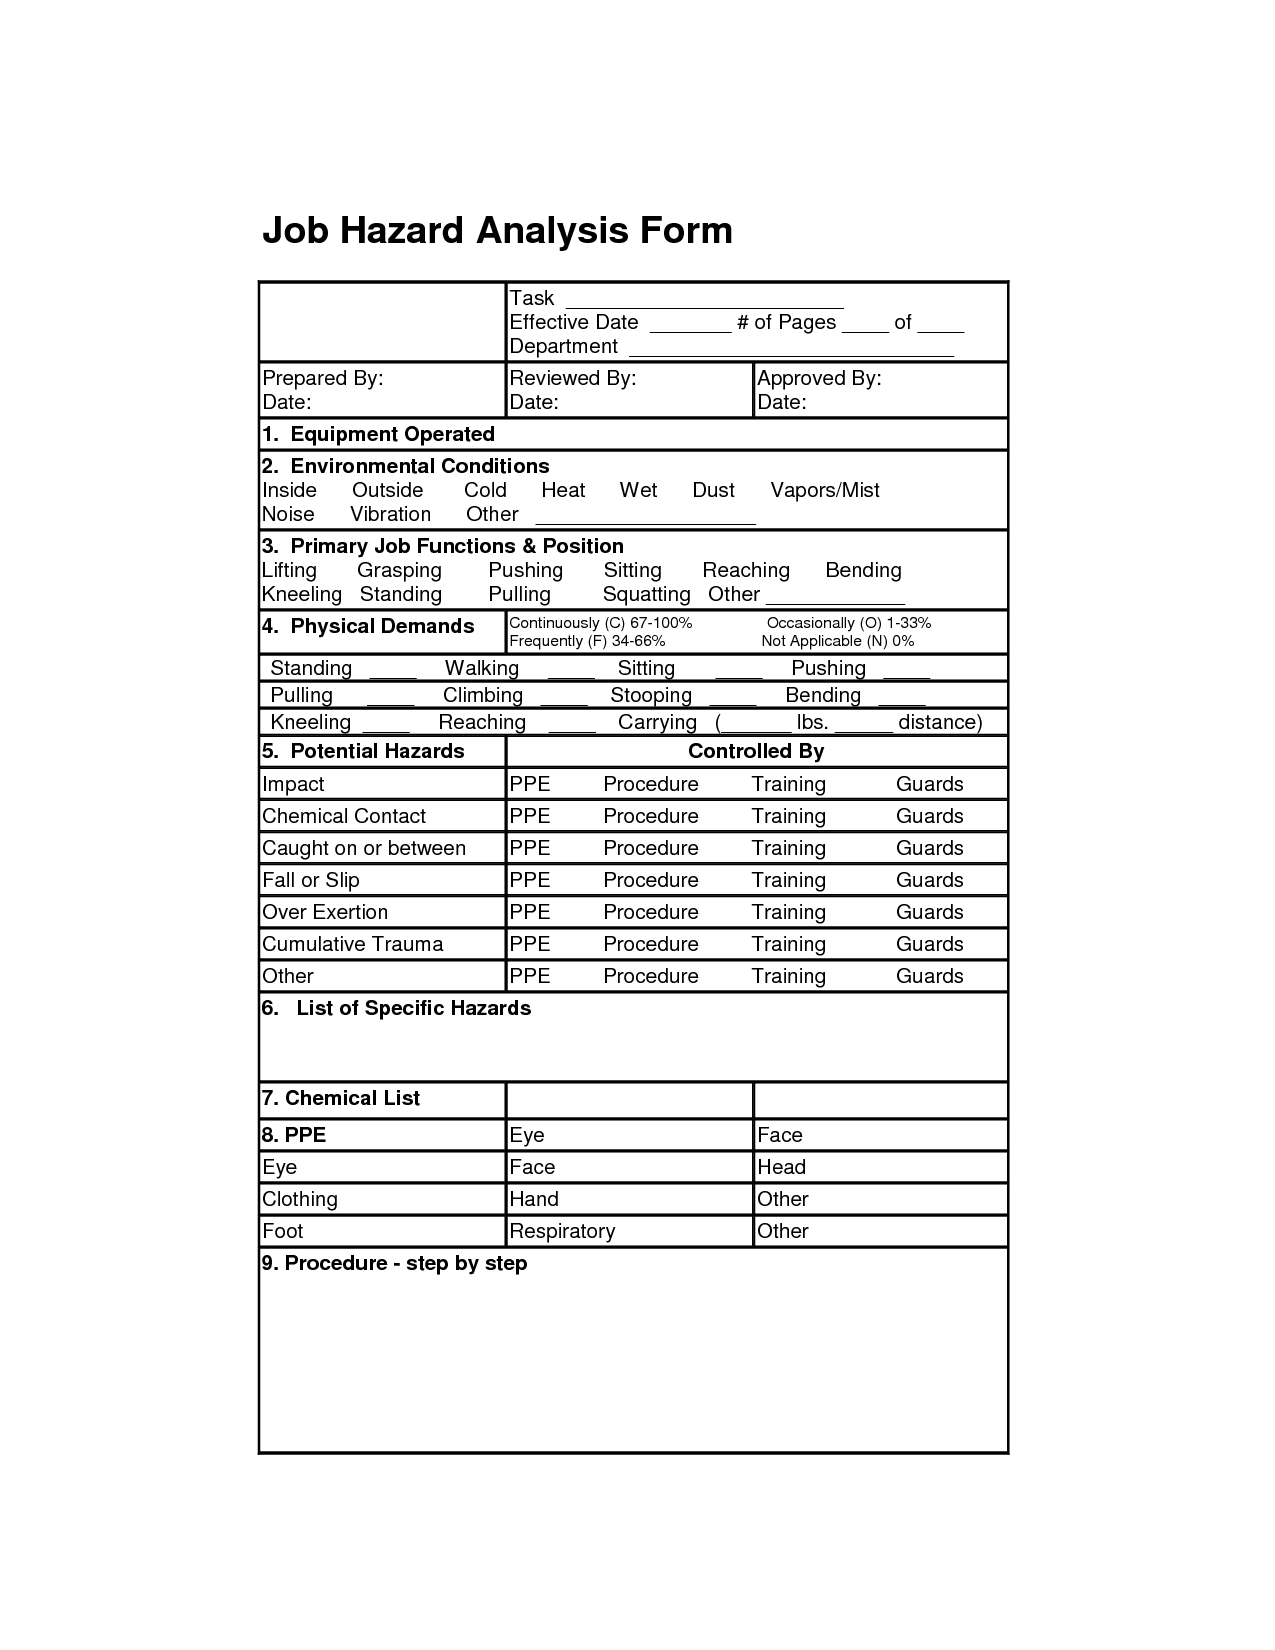 Job Hazard Analysis Form  Job Analysis Forms  Job Analysis Site for Safety Analysis Report Template